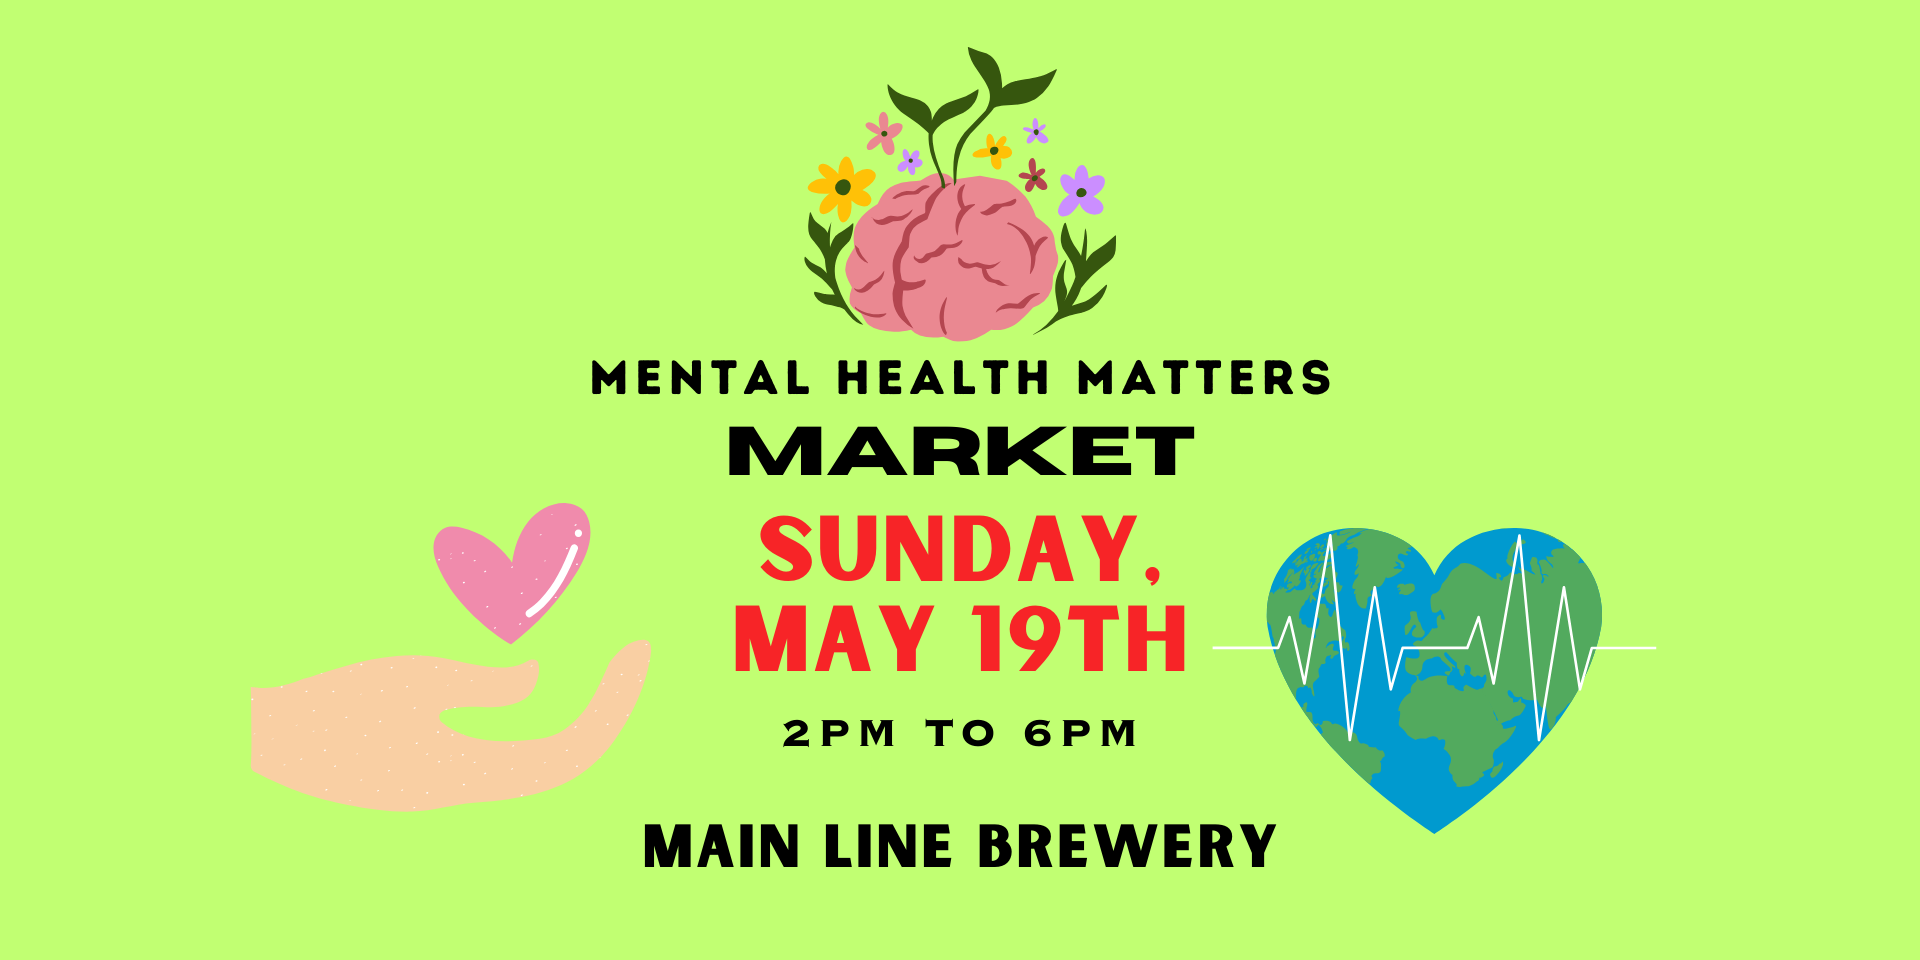 Mental Health Matters Market promotional image